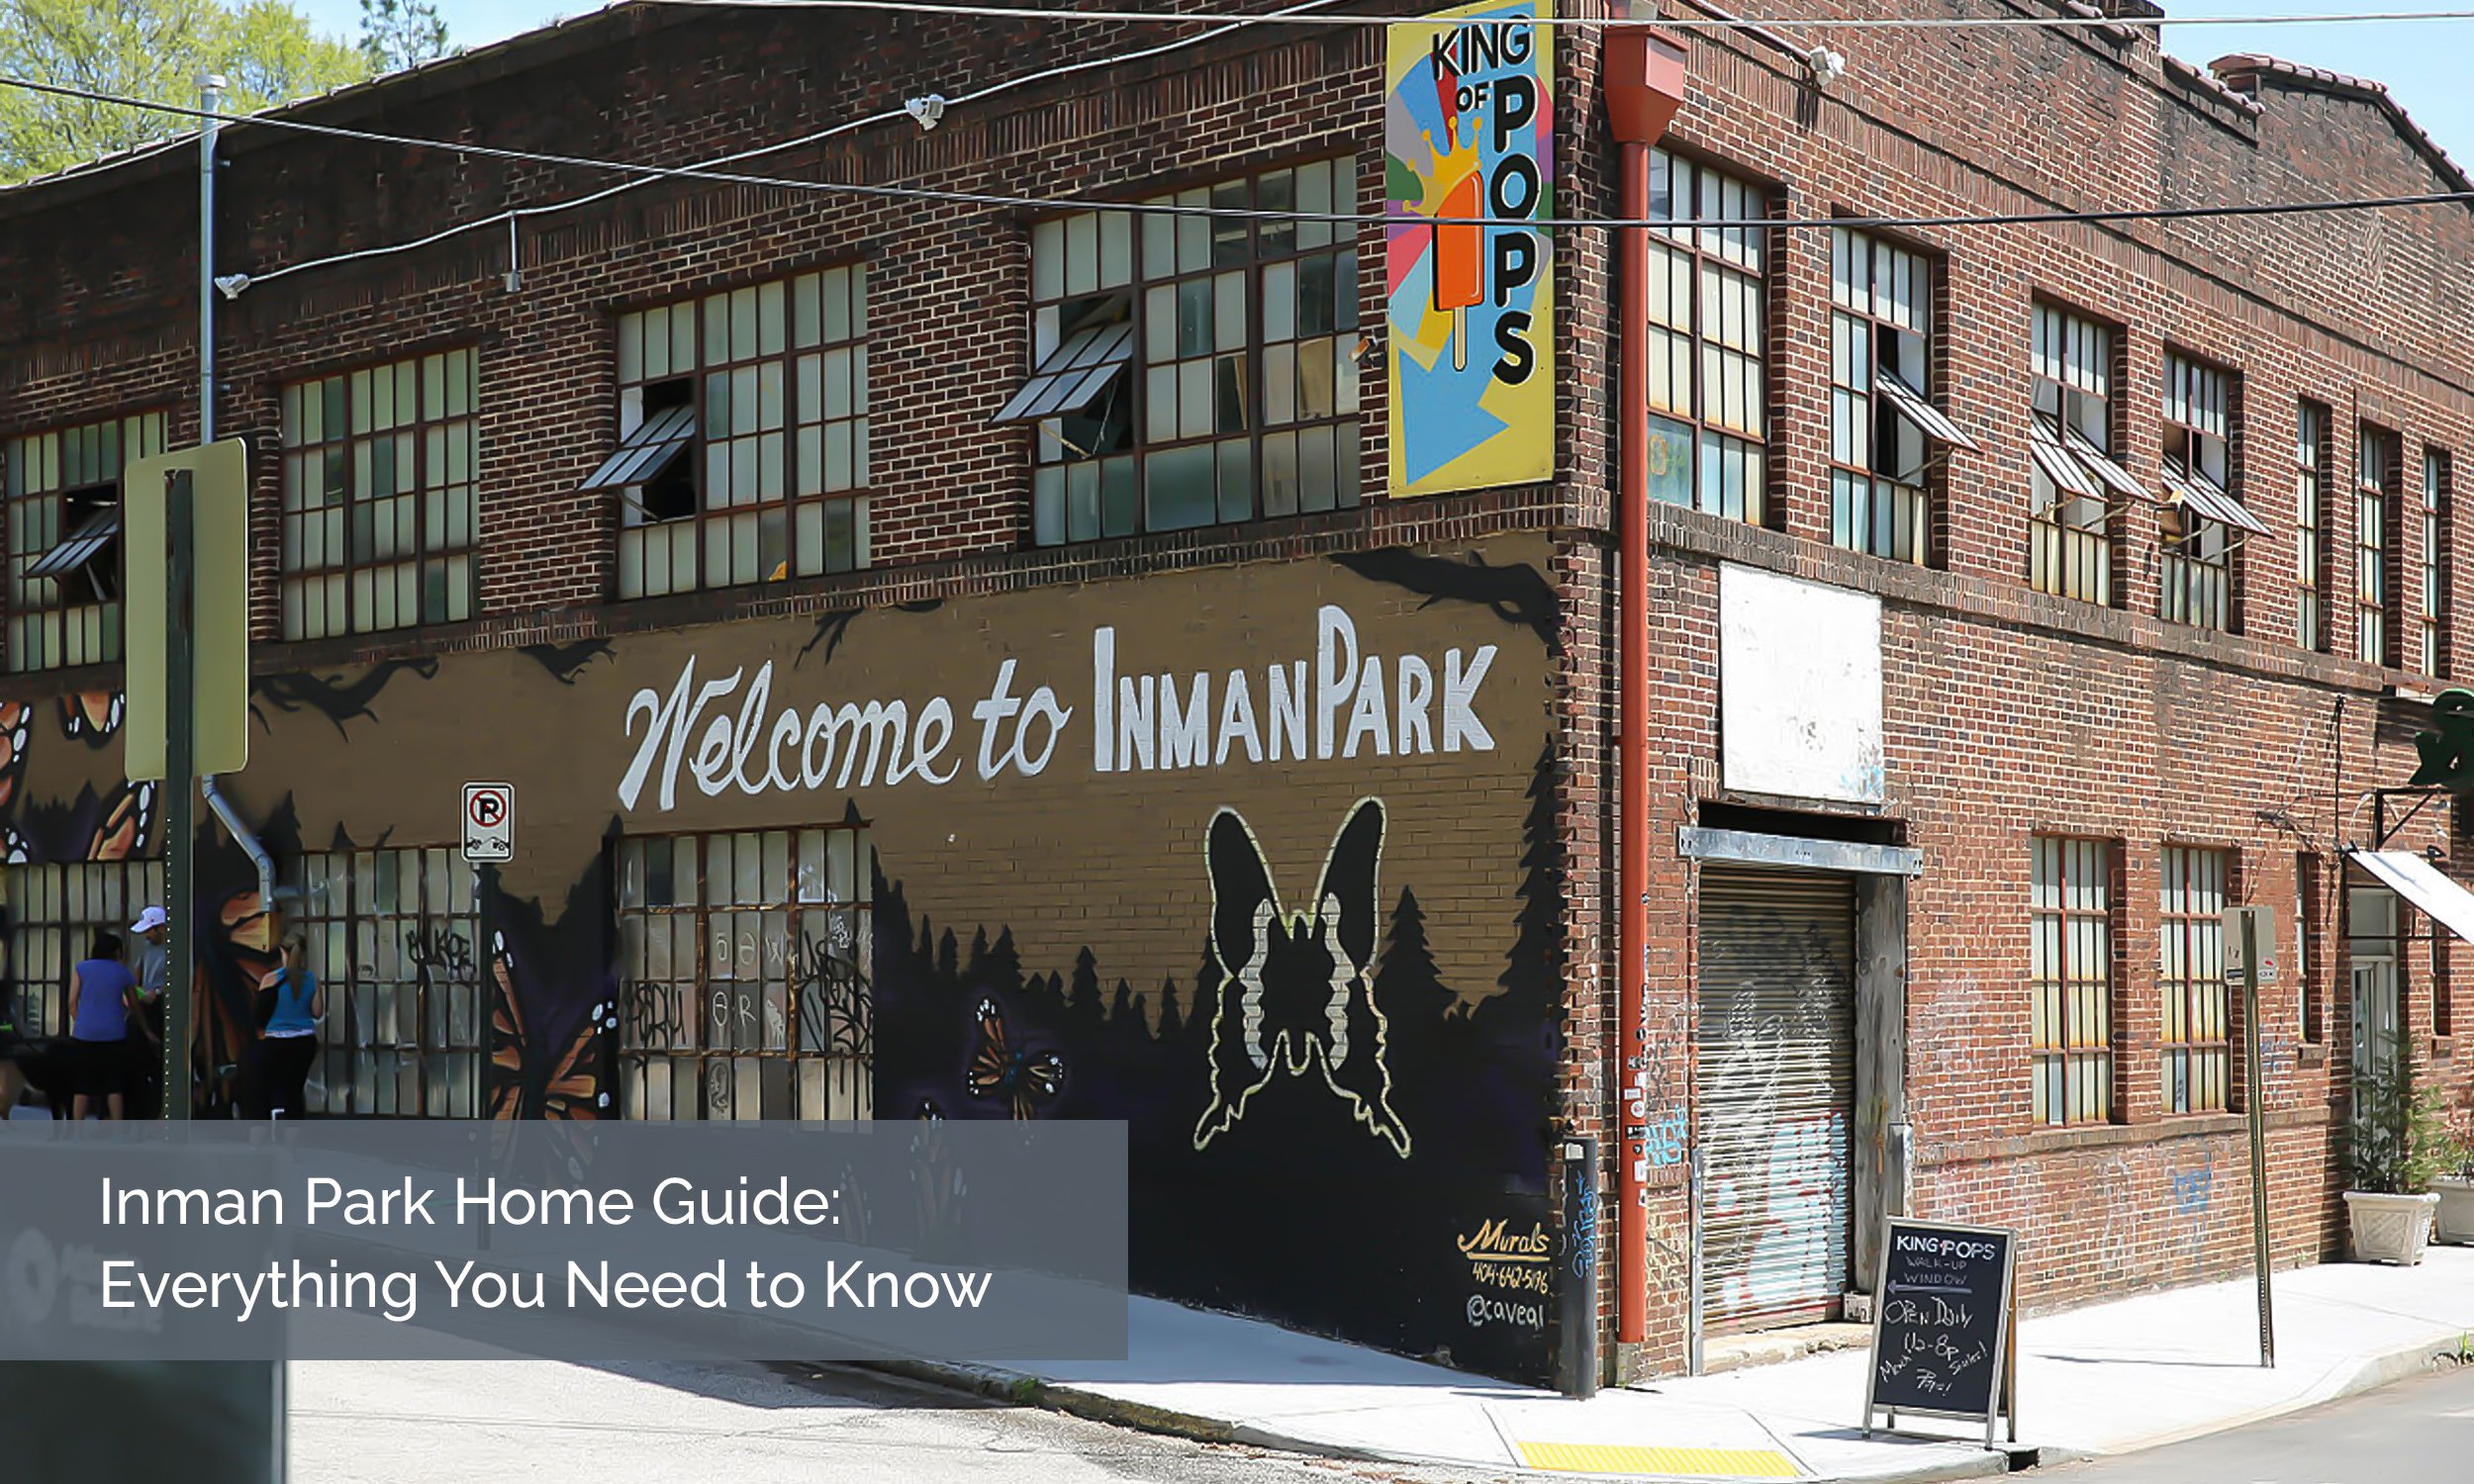 Brookhaven, Atlanta GA - Neighborhood Guide